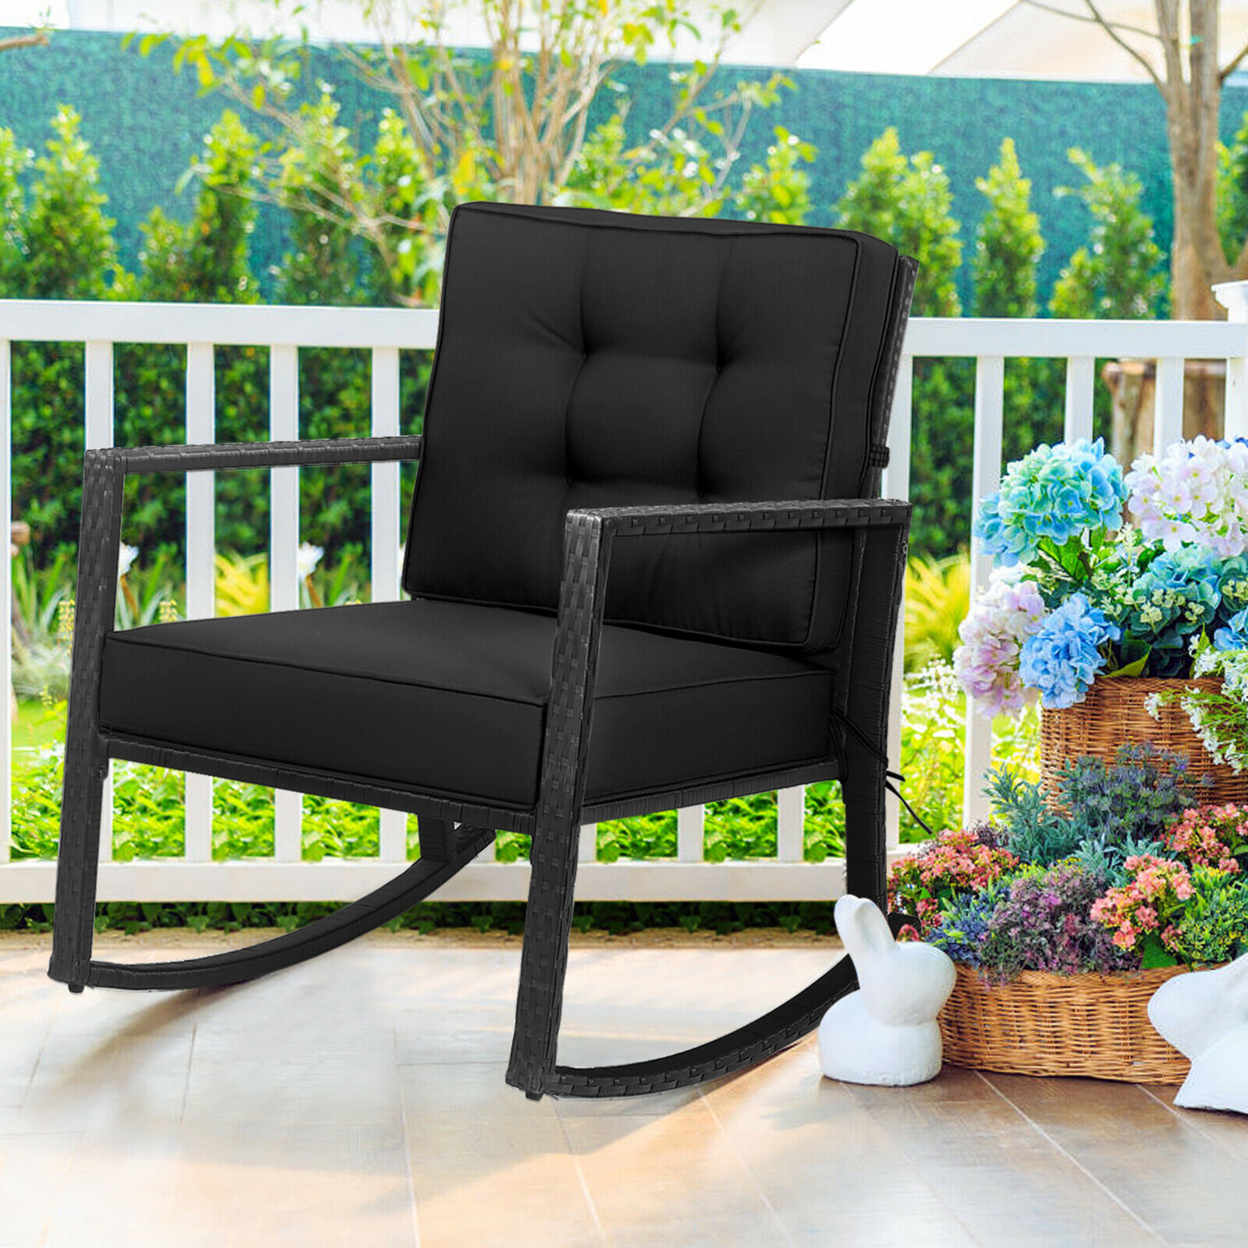 Outdoor Wicker Rocking Chair Patio Lawn Rattan Single Chair Glider W/ Black Cushion